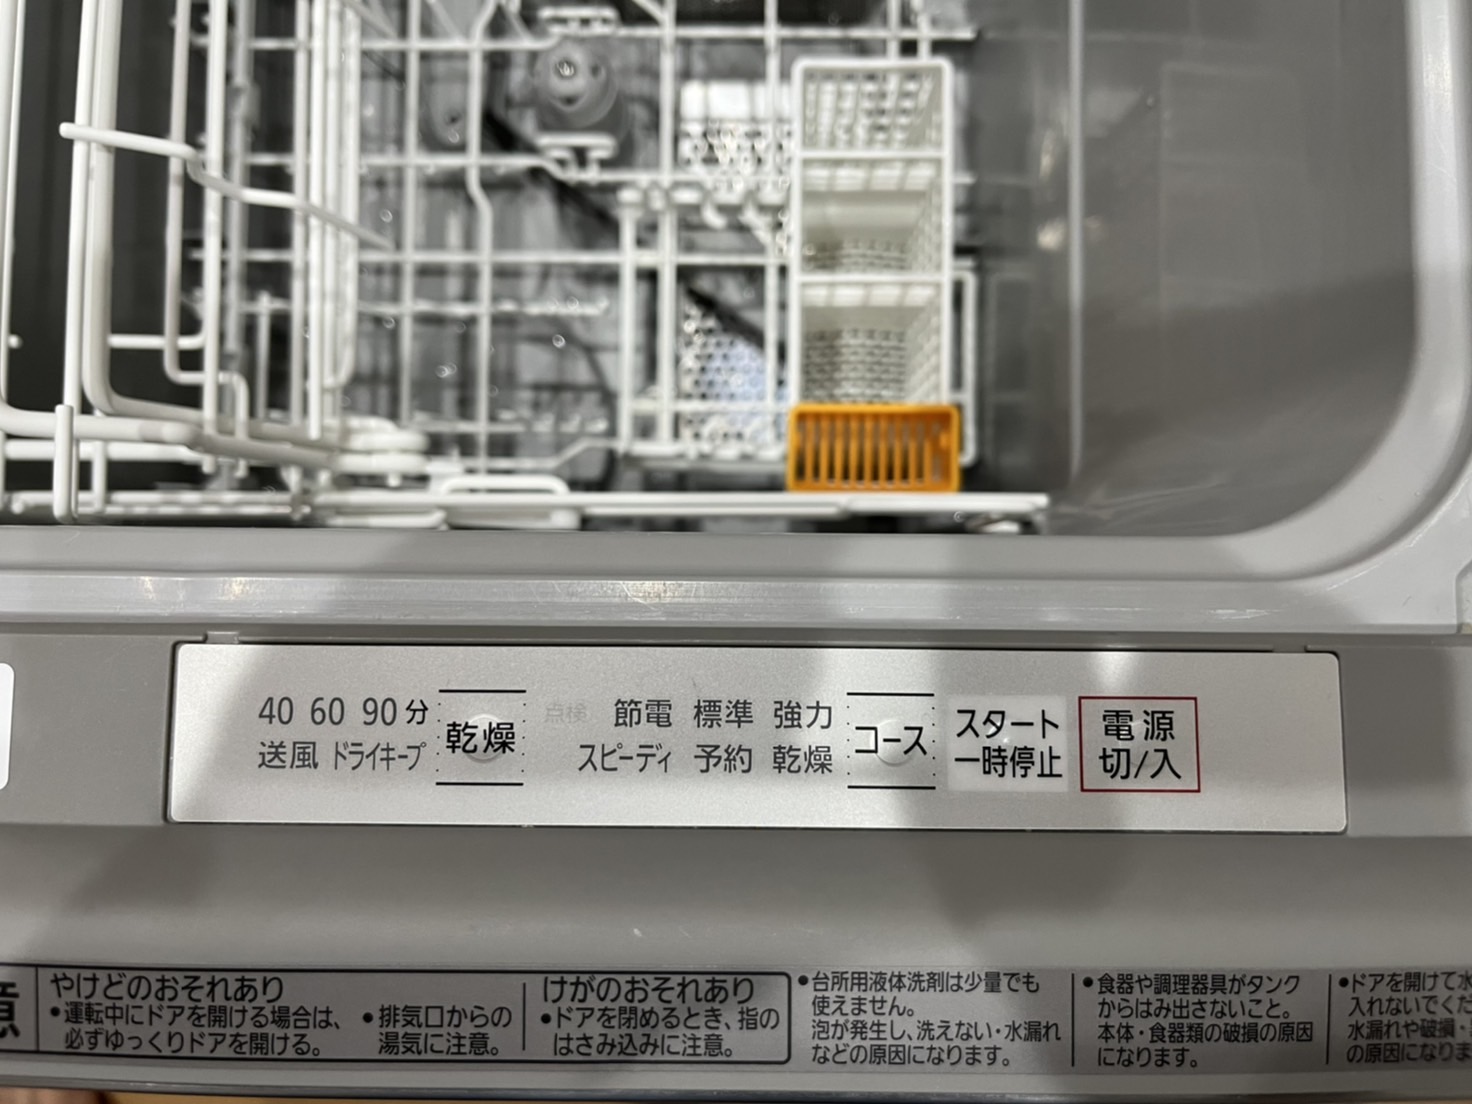 Panasonic
深型食洗器
リシェルSI
操作ボタン